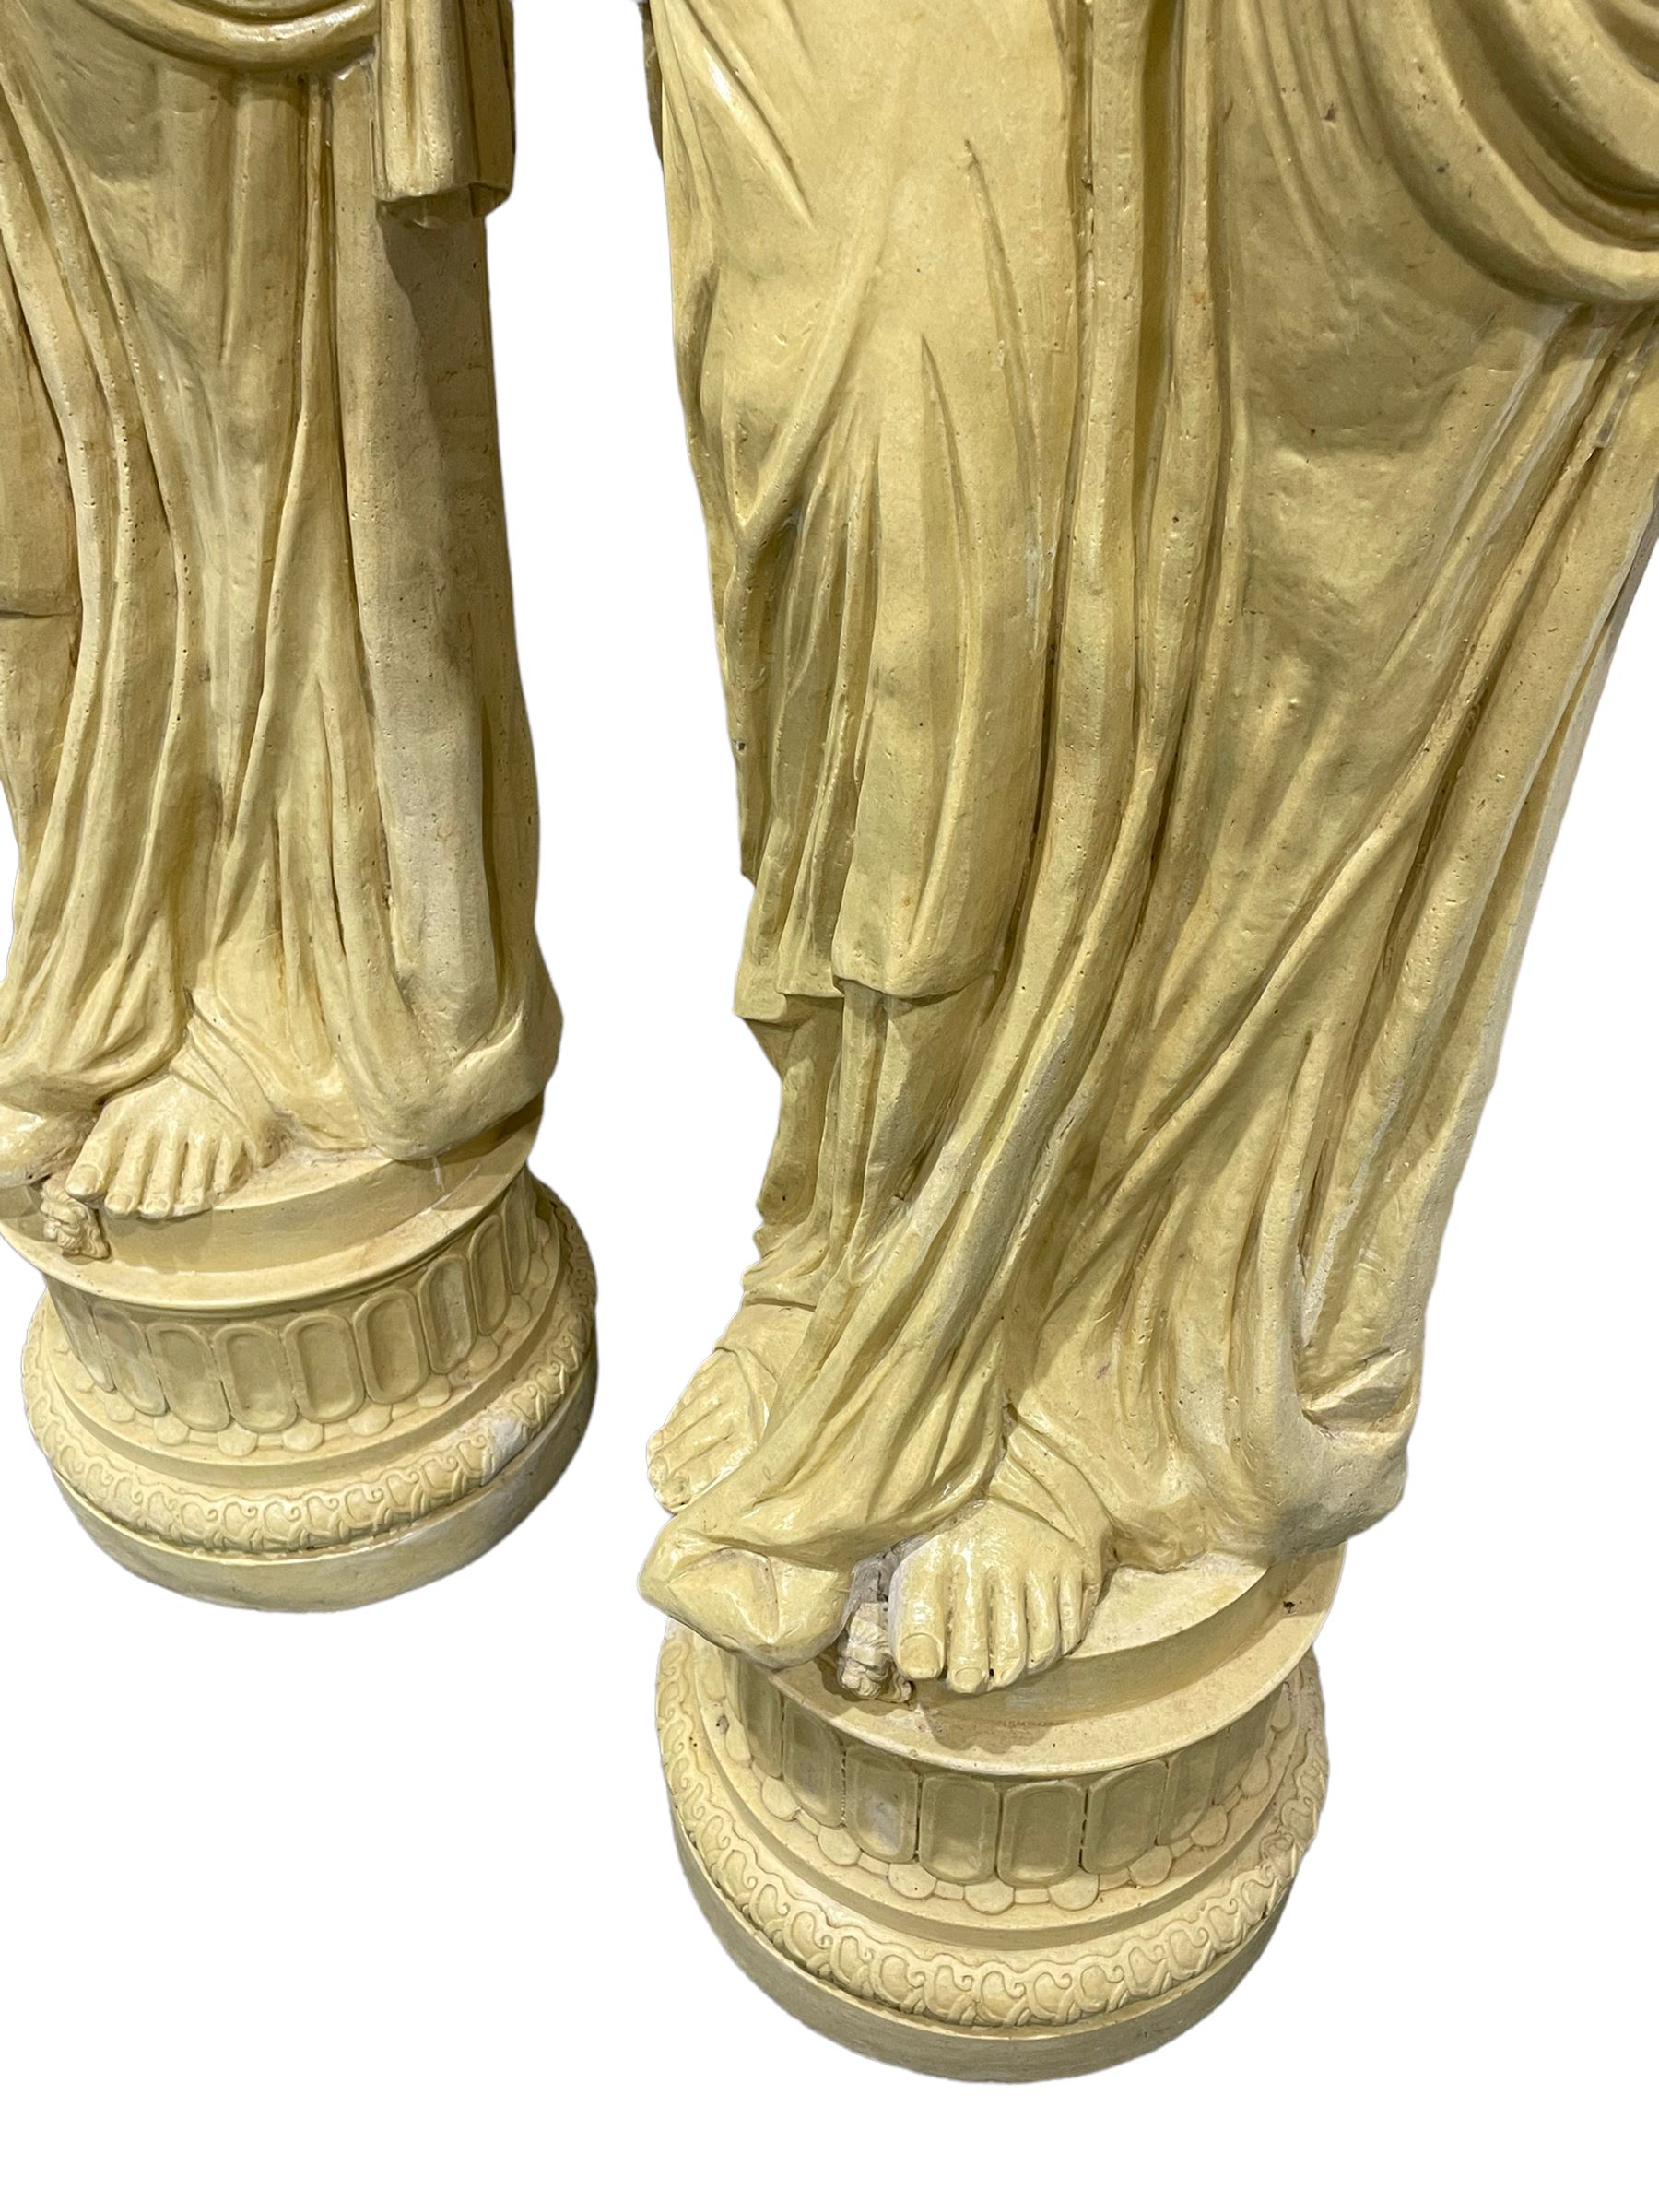 Pair Greek style caryatid columns - Image 6 of 7